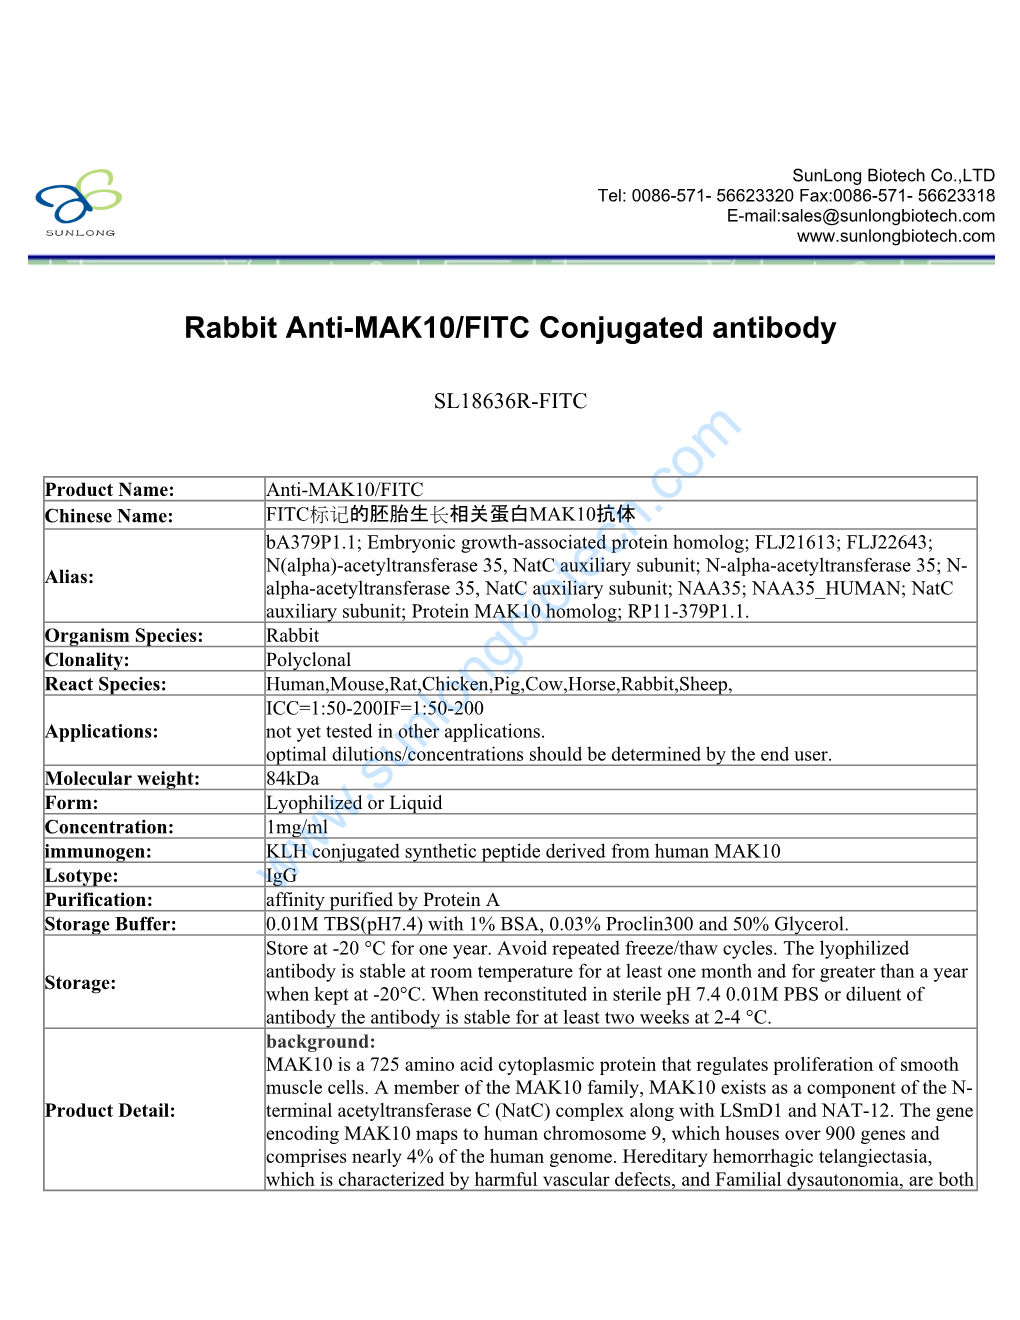 Rabbit Anti-MAK10/FITC Conjugated Antibody